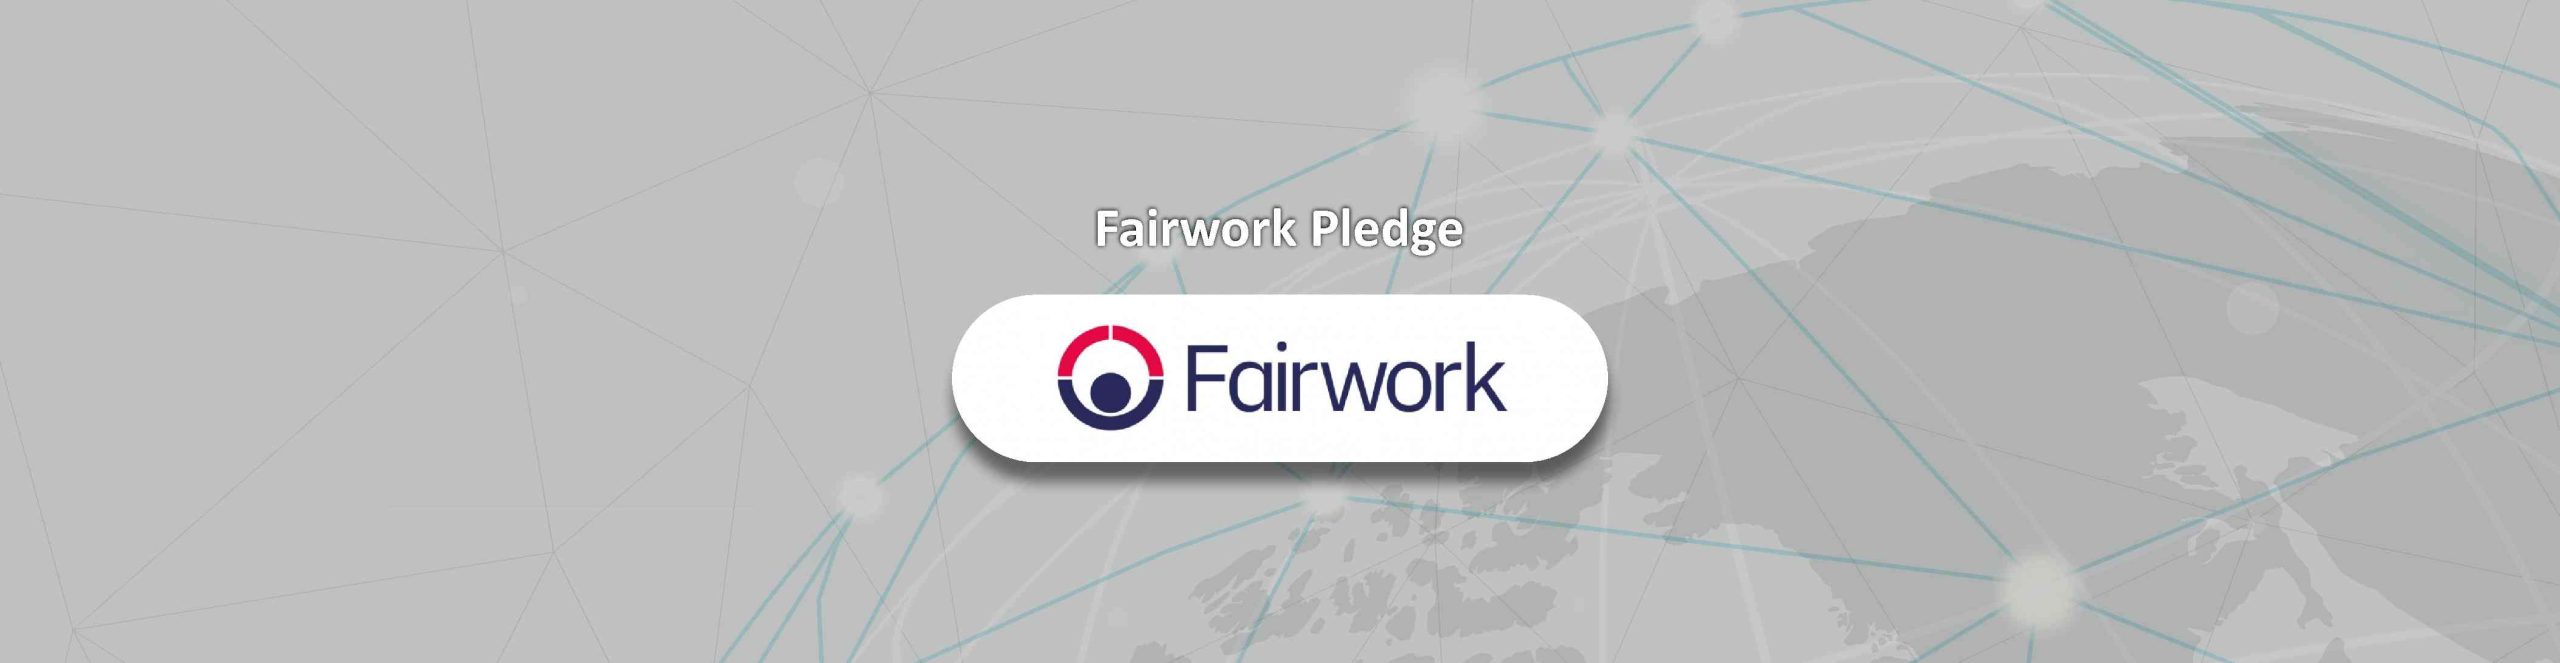 Fairwork Pledge